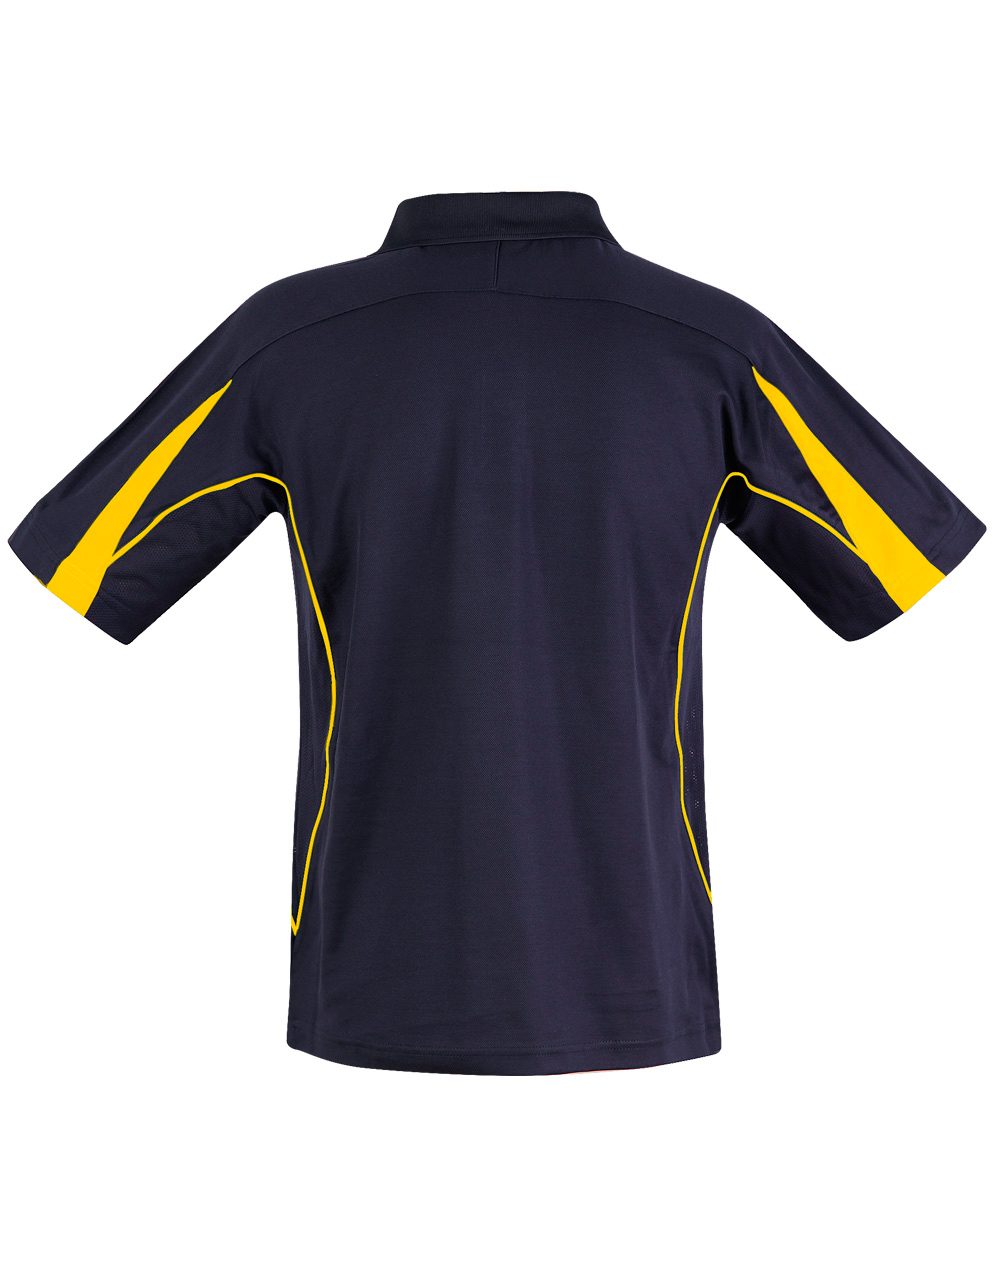 Custom (Navy Gold) Legend Polo Shirts for Men Cotton Back Online Perth Australia